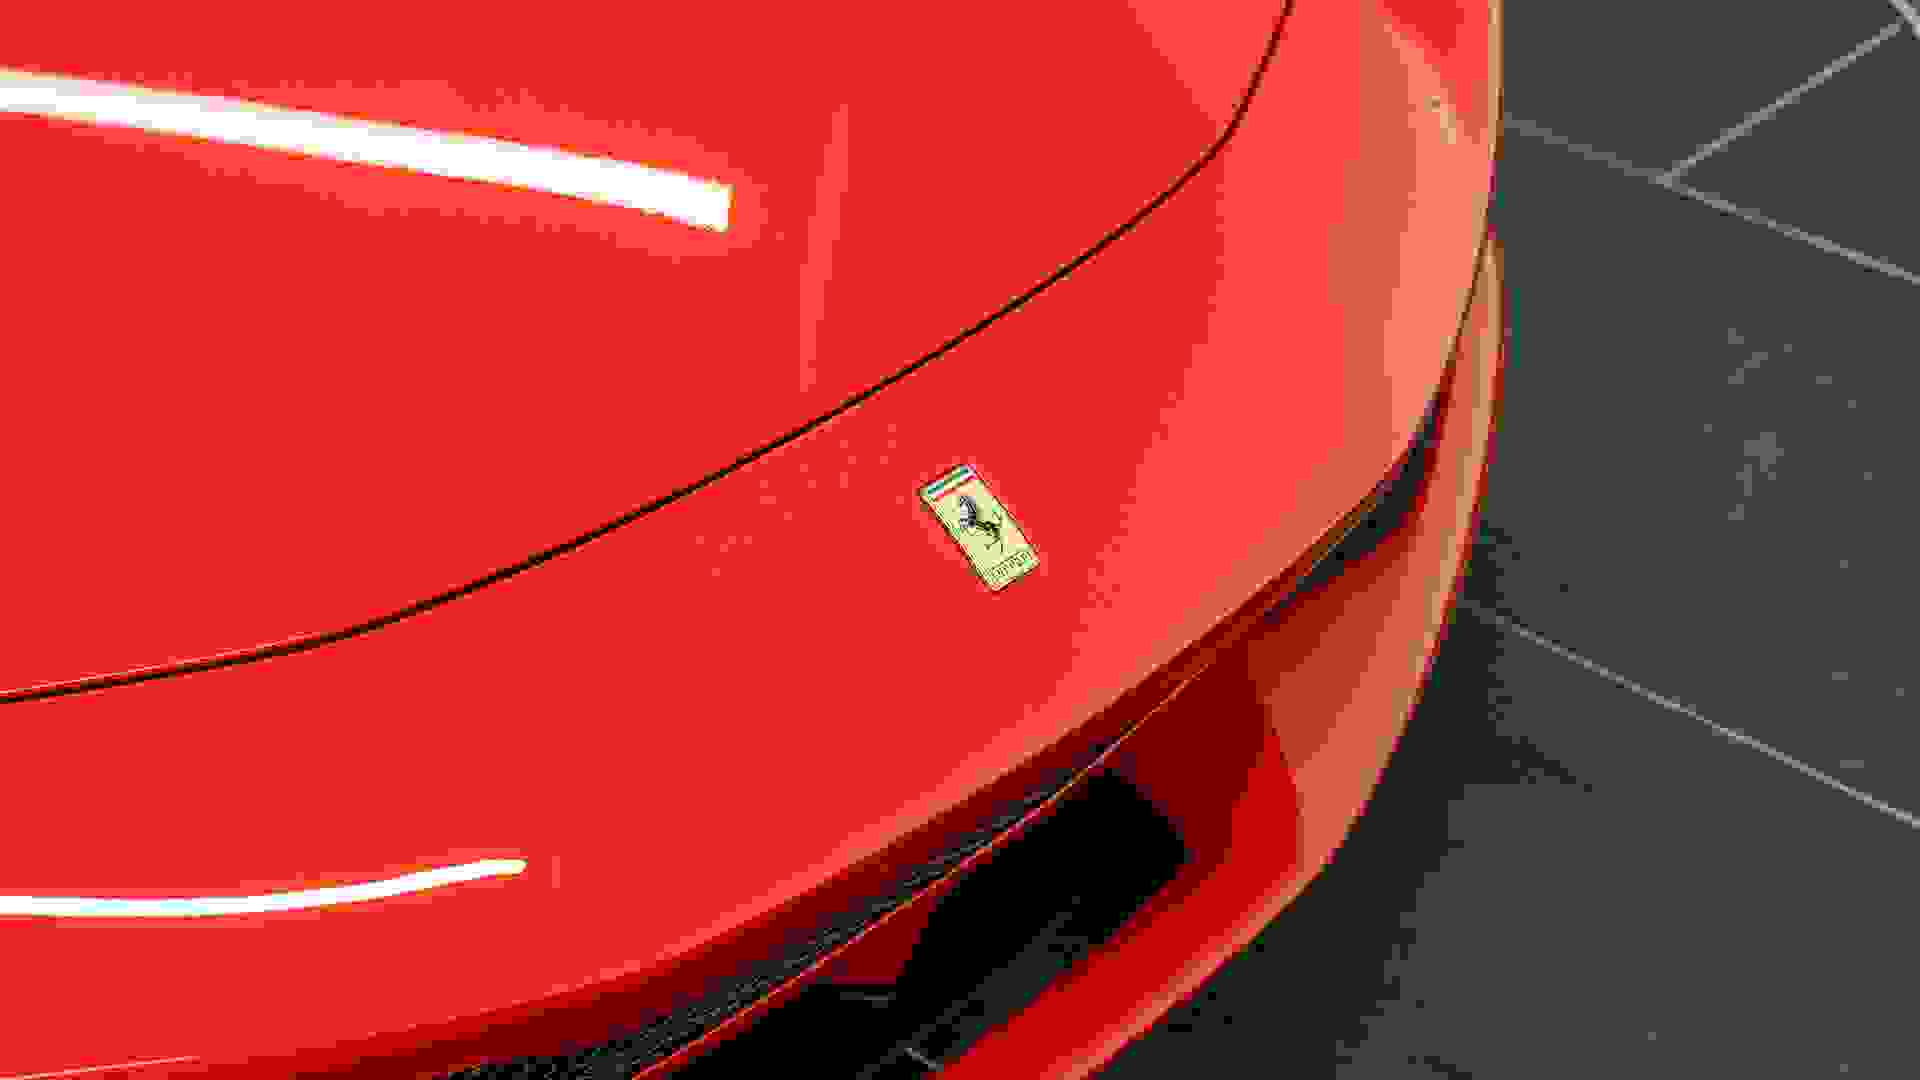 Ferrari 296 Photo eb58e992-249a-40f9-96db-6c49343dc13f.jpg